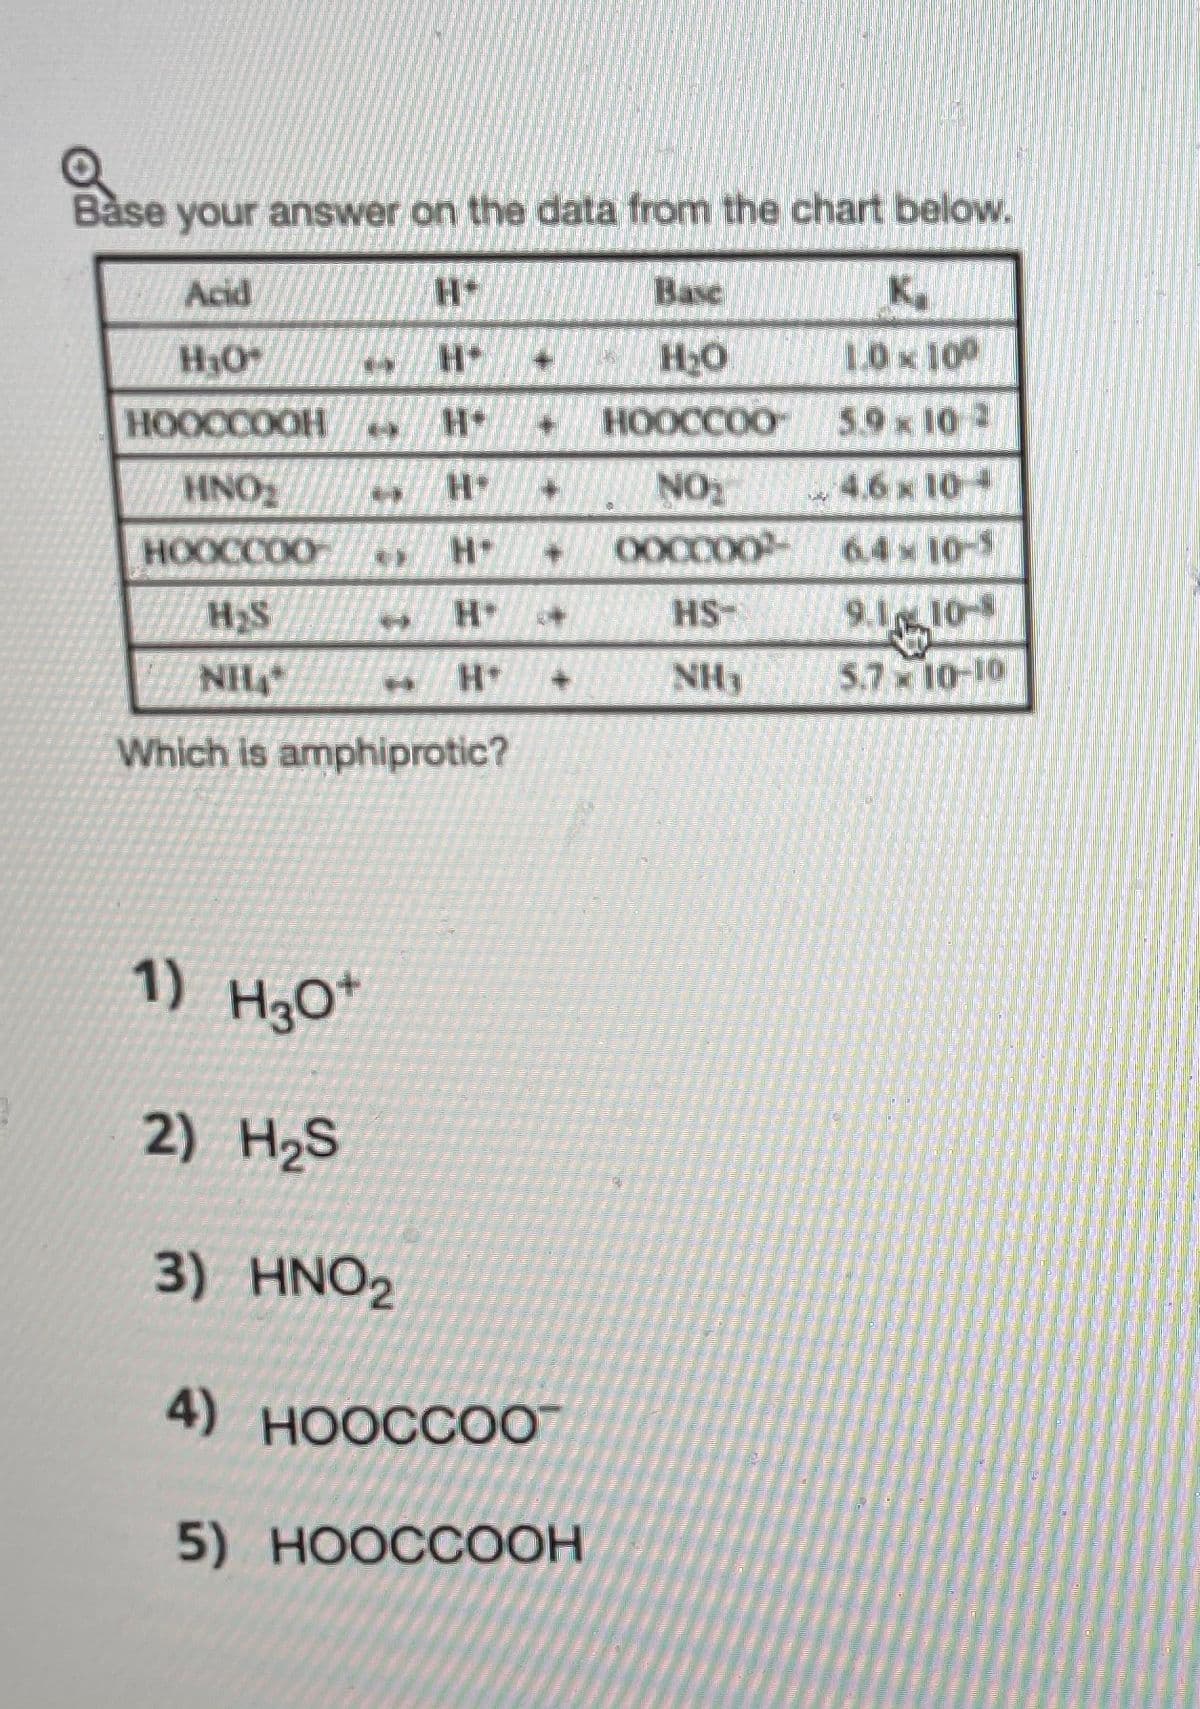 Båse your answer on the data from the chart below.
Acid
Base
K
H3O
H2O
1.0x 100
HOOCCOOH
HOOCCOO
5.9 x 10 2
HNO2
NO
4.6 x 104
HOOCCO0
6.4x 10-5
H2S
HS
9.1 10-
NH
NH3
5.7x 10-10
Which is amphiprotic?
1) HgO*
2)
H2S
3) HNO2
4) НООССОО
5) НООССООН
